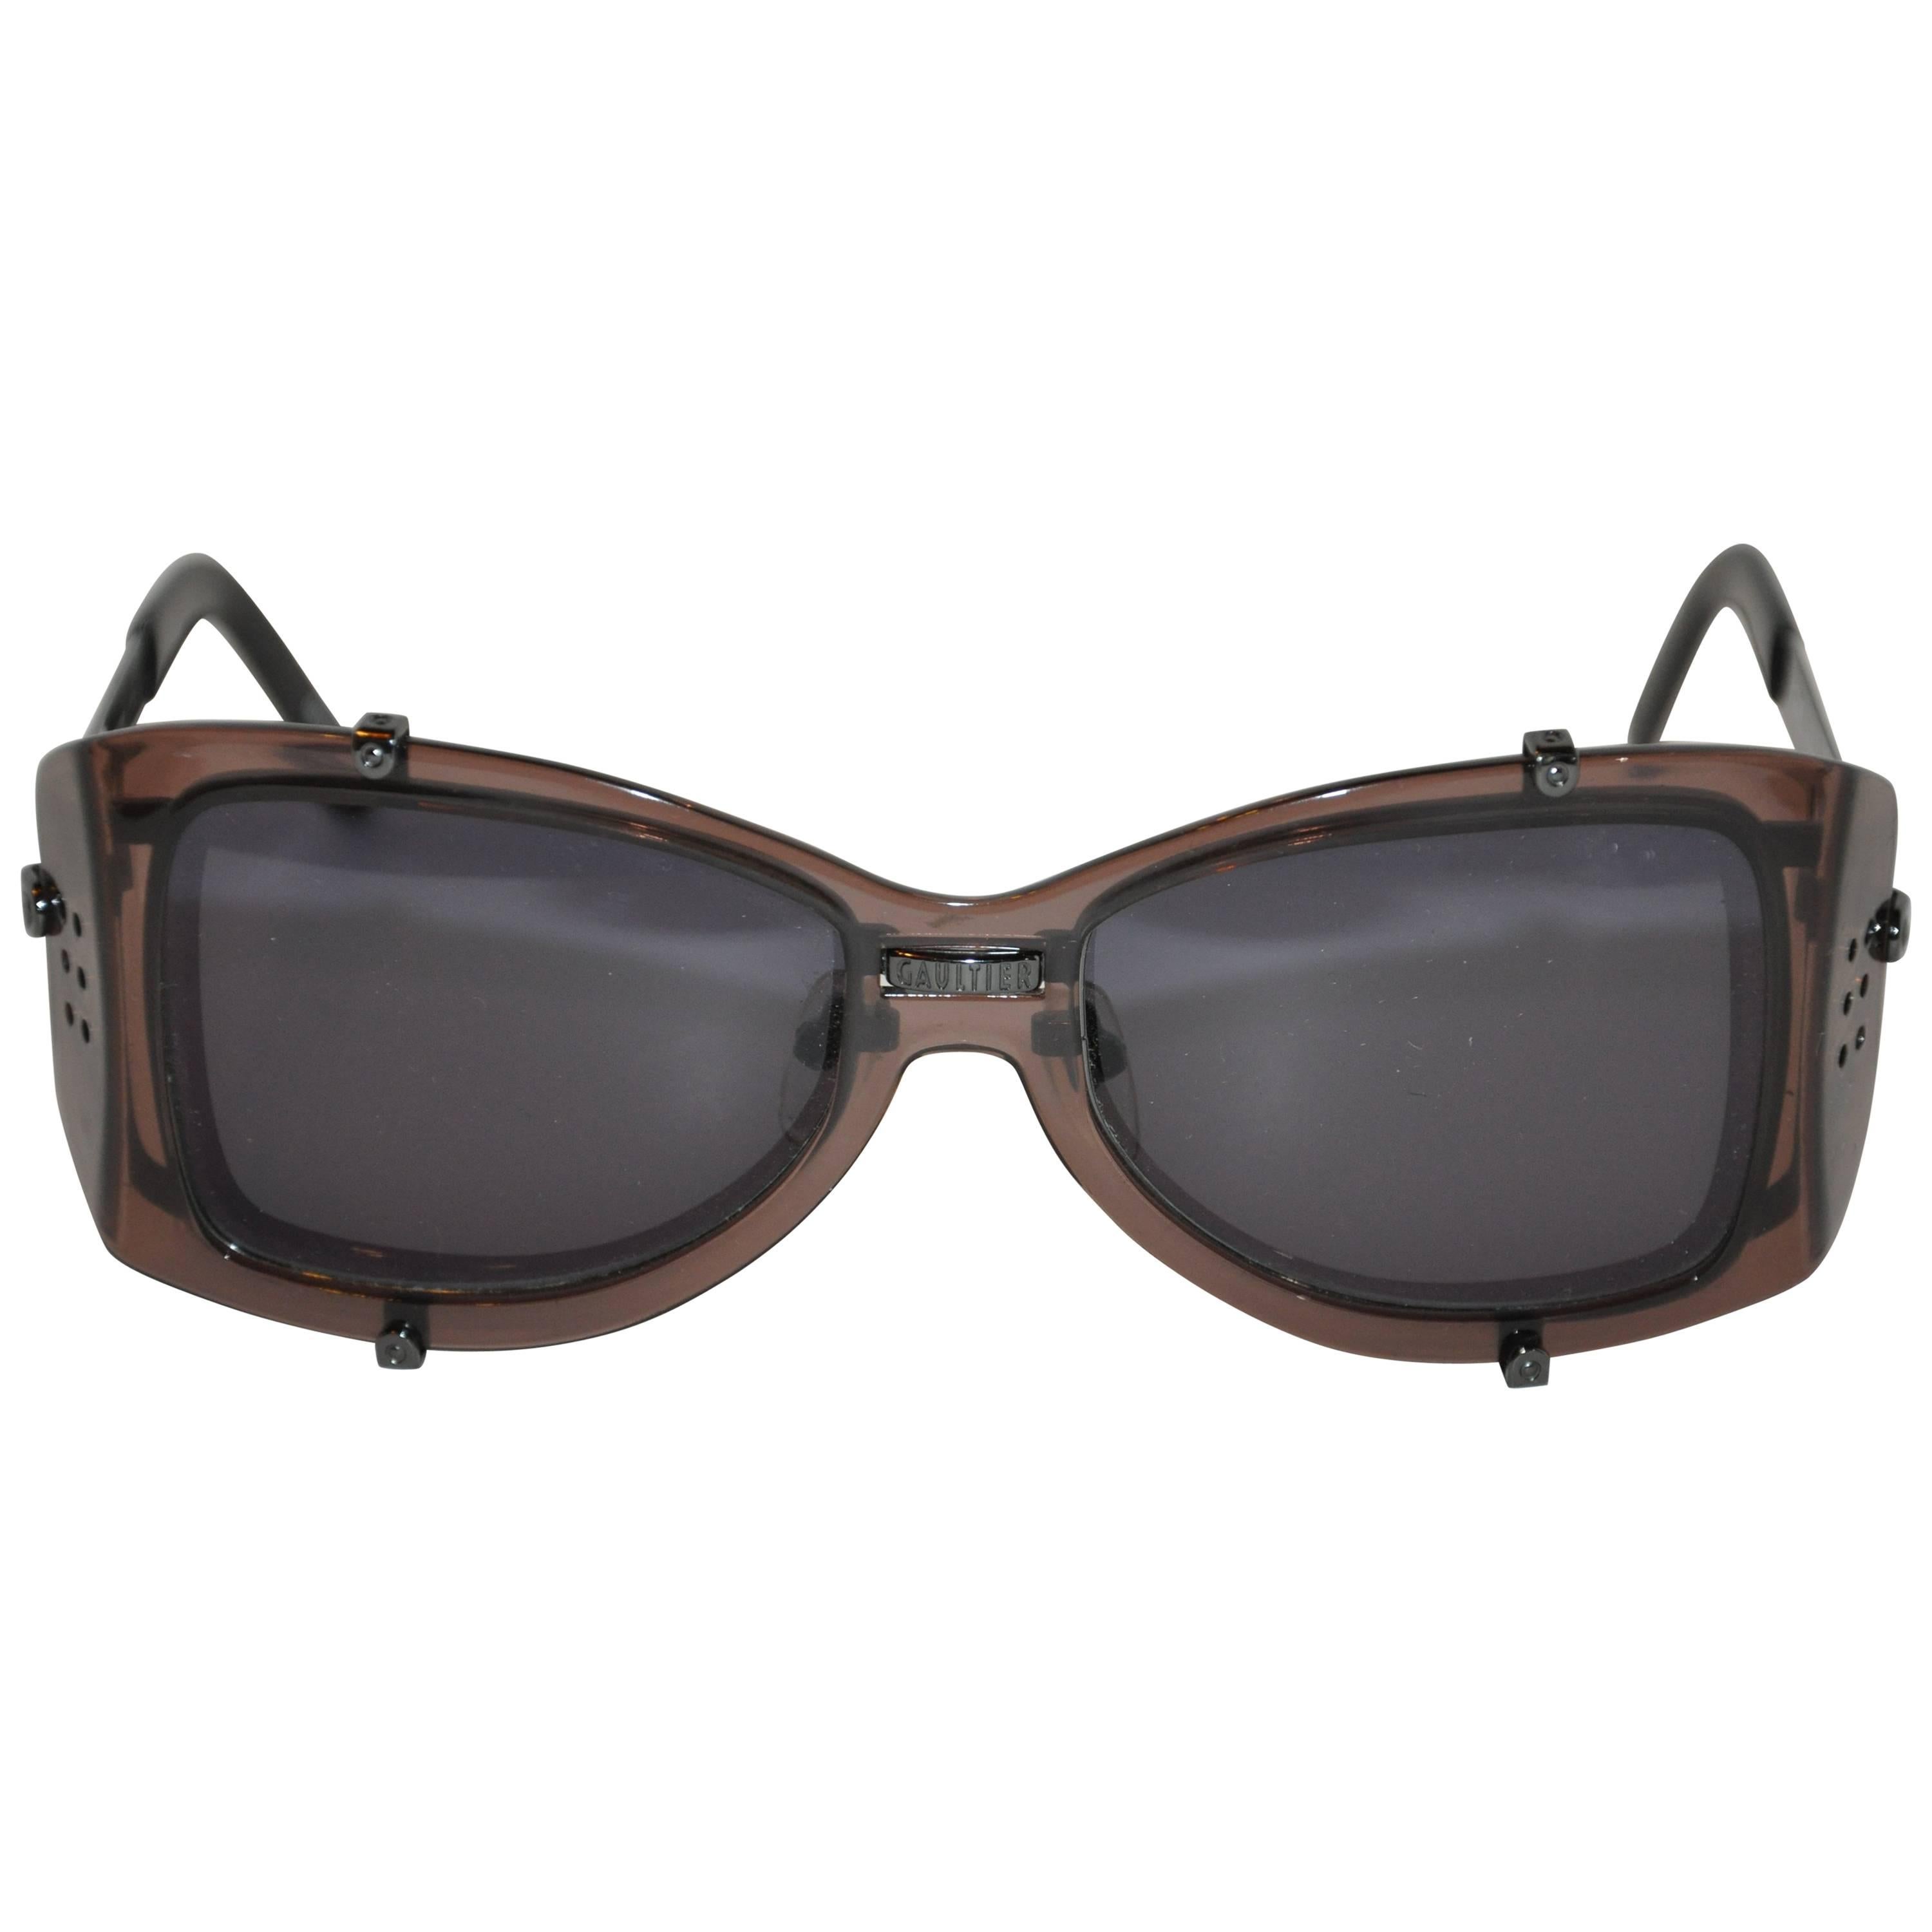 Jean Paul Gaultier Smoked Hardware & Smoked Lucite Studded Sunglasses